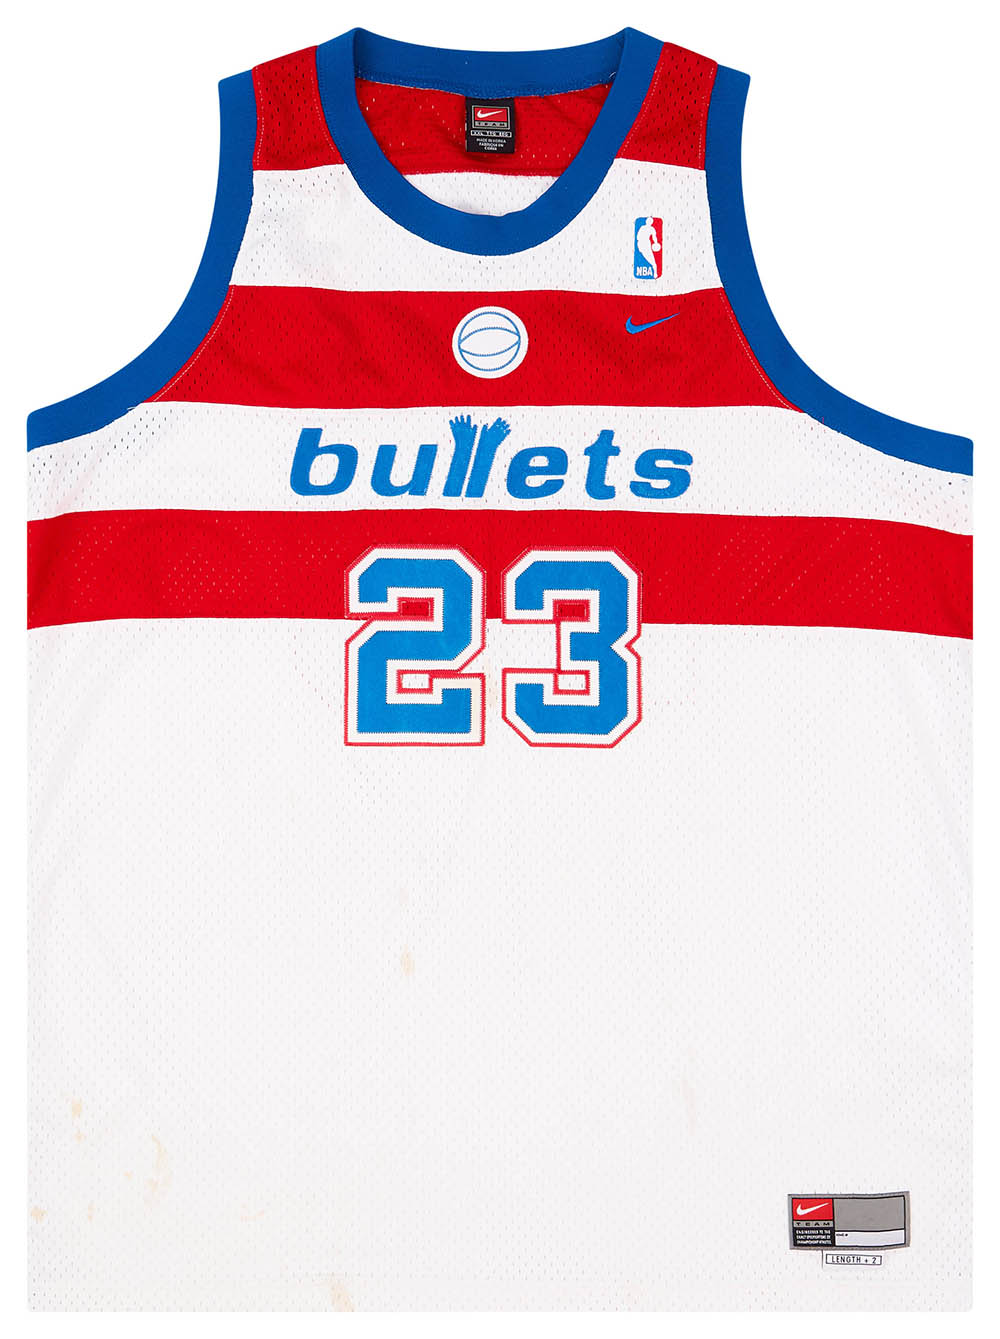 2001 Washington Bullets Michael Jordan Nike Jersey - 5 Star Vintage